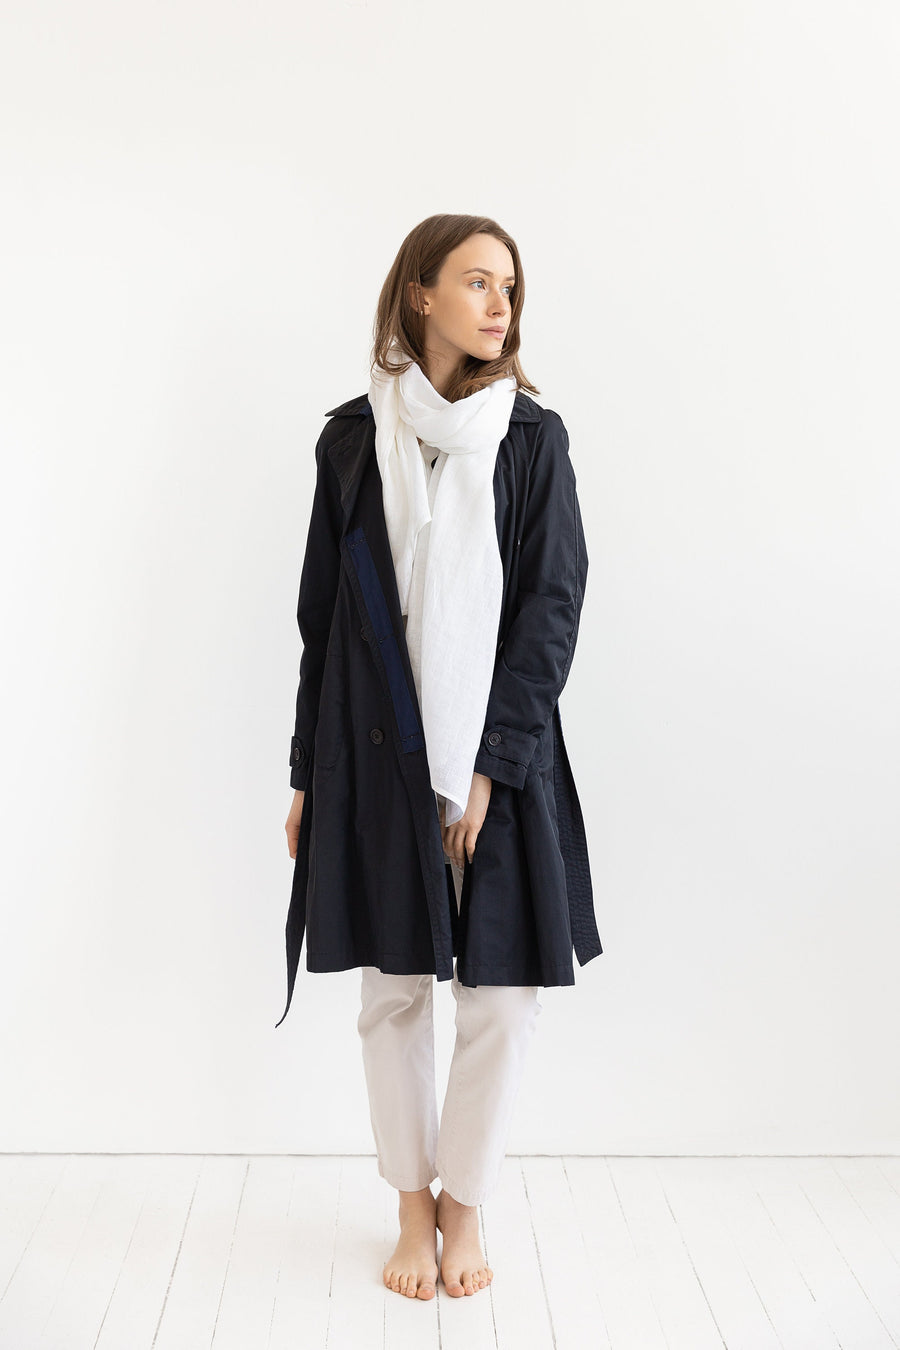 White linen lightweight scarf - Linen Couture Boutique